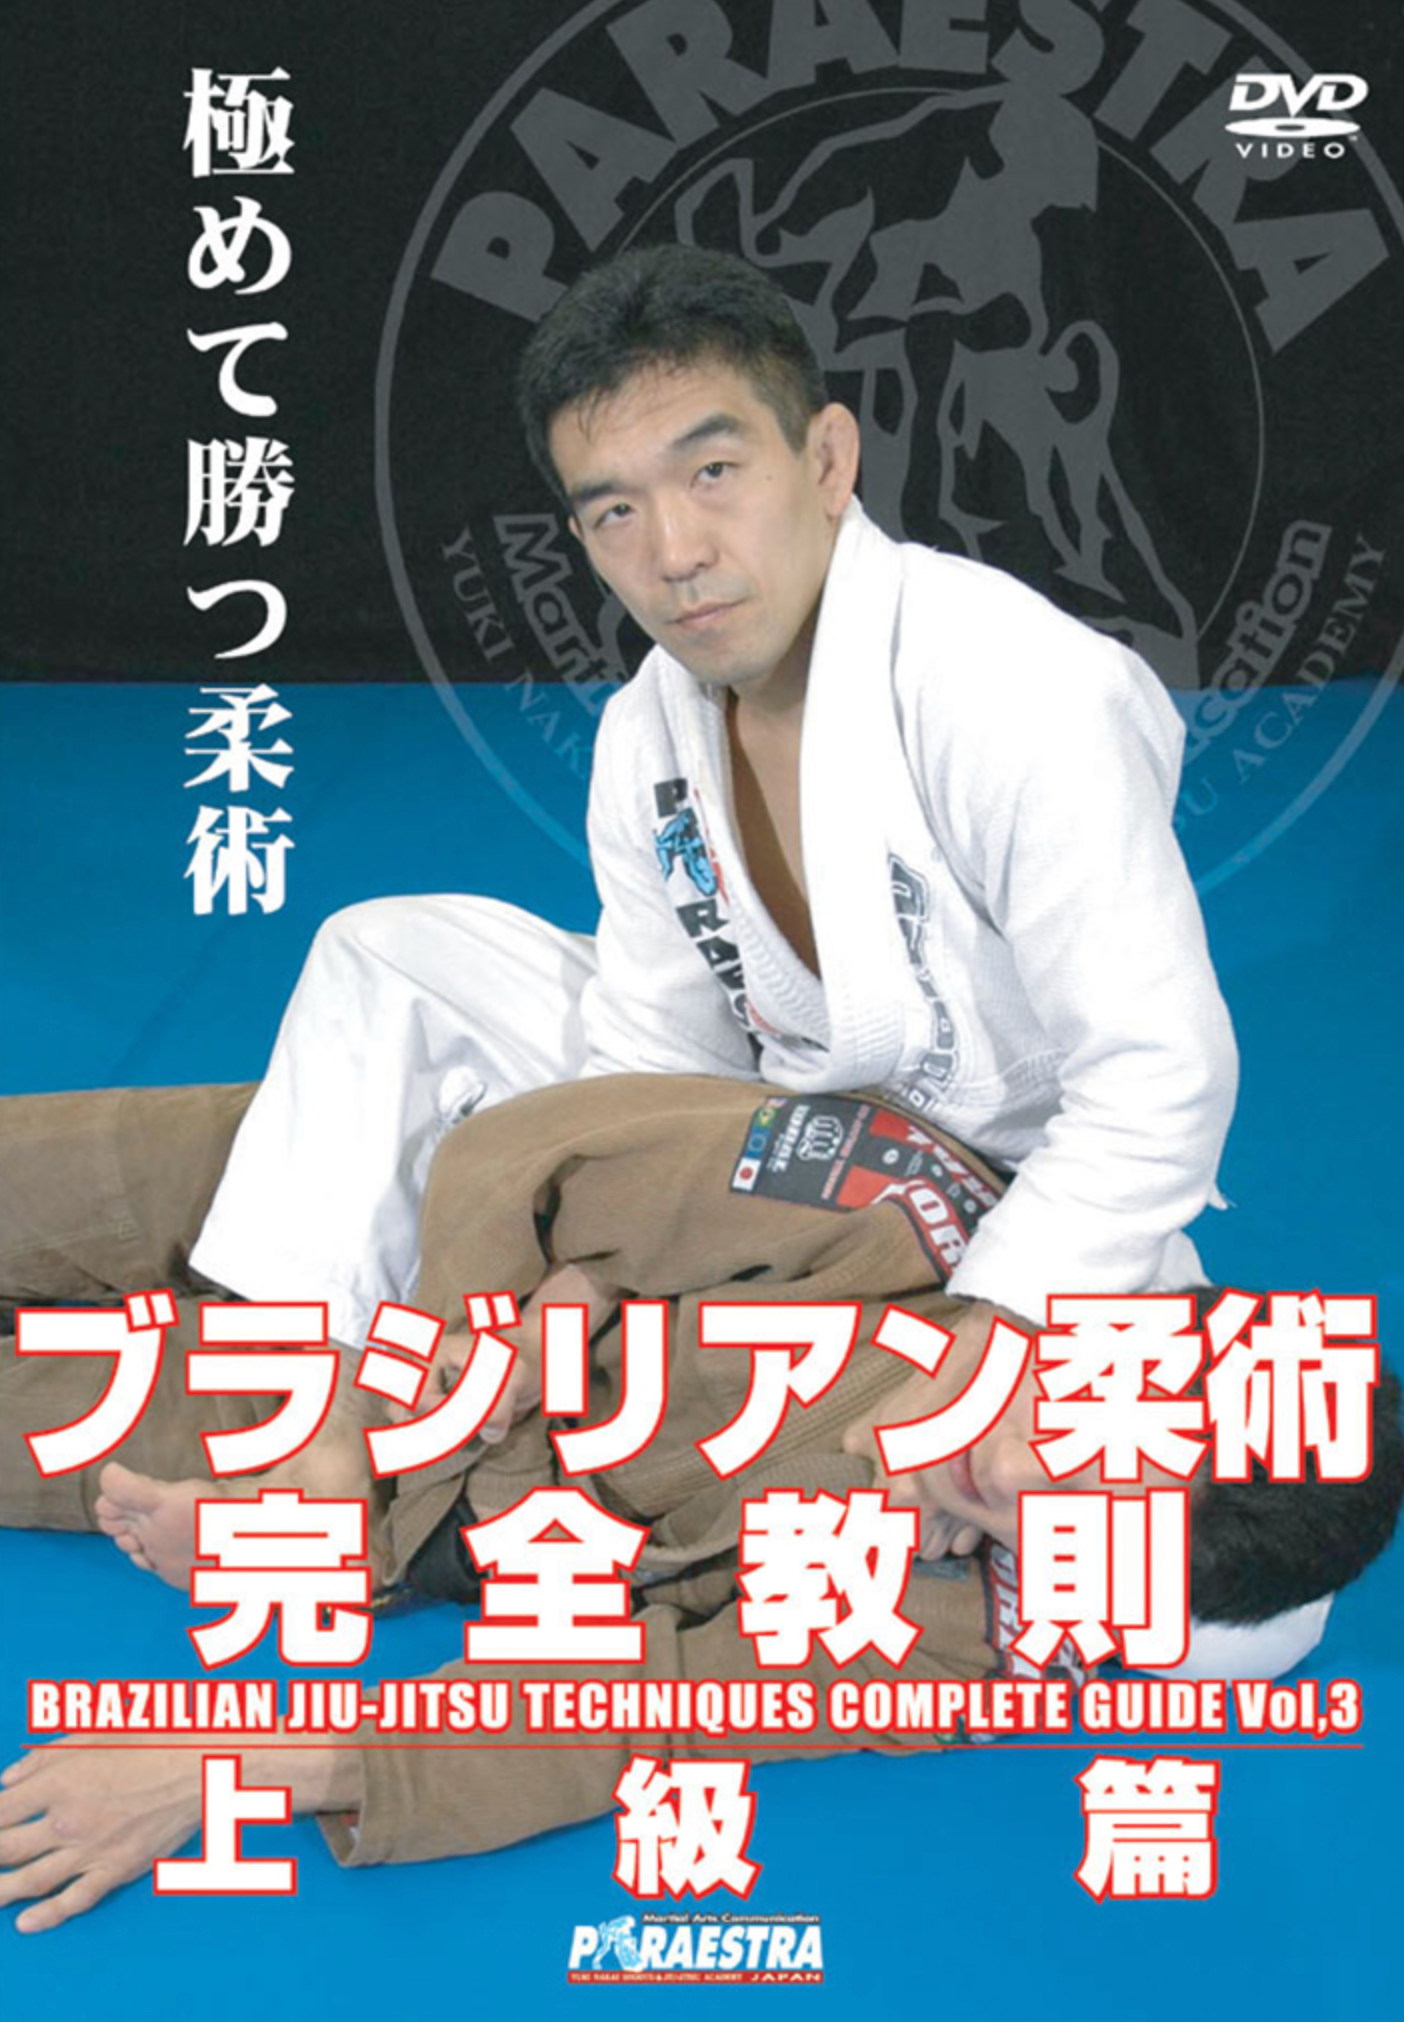 De la Riva: Master of Jiu-jitsu DVD 2 – Budovideos Inc